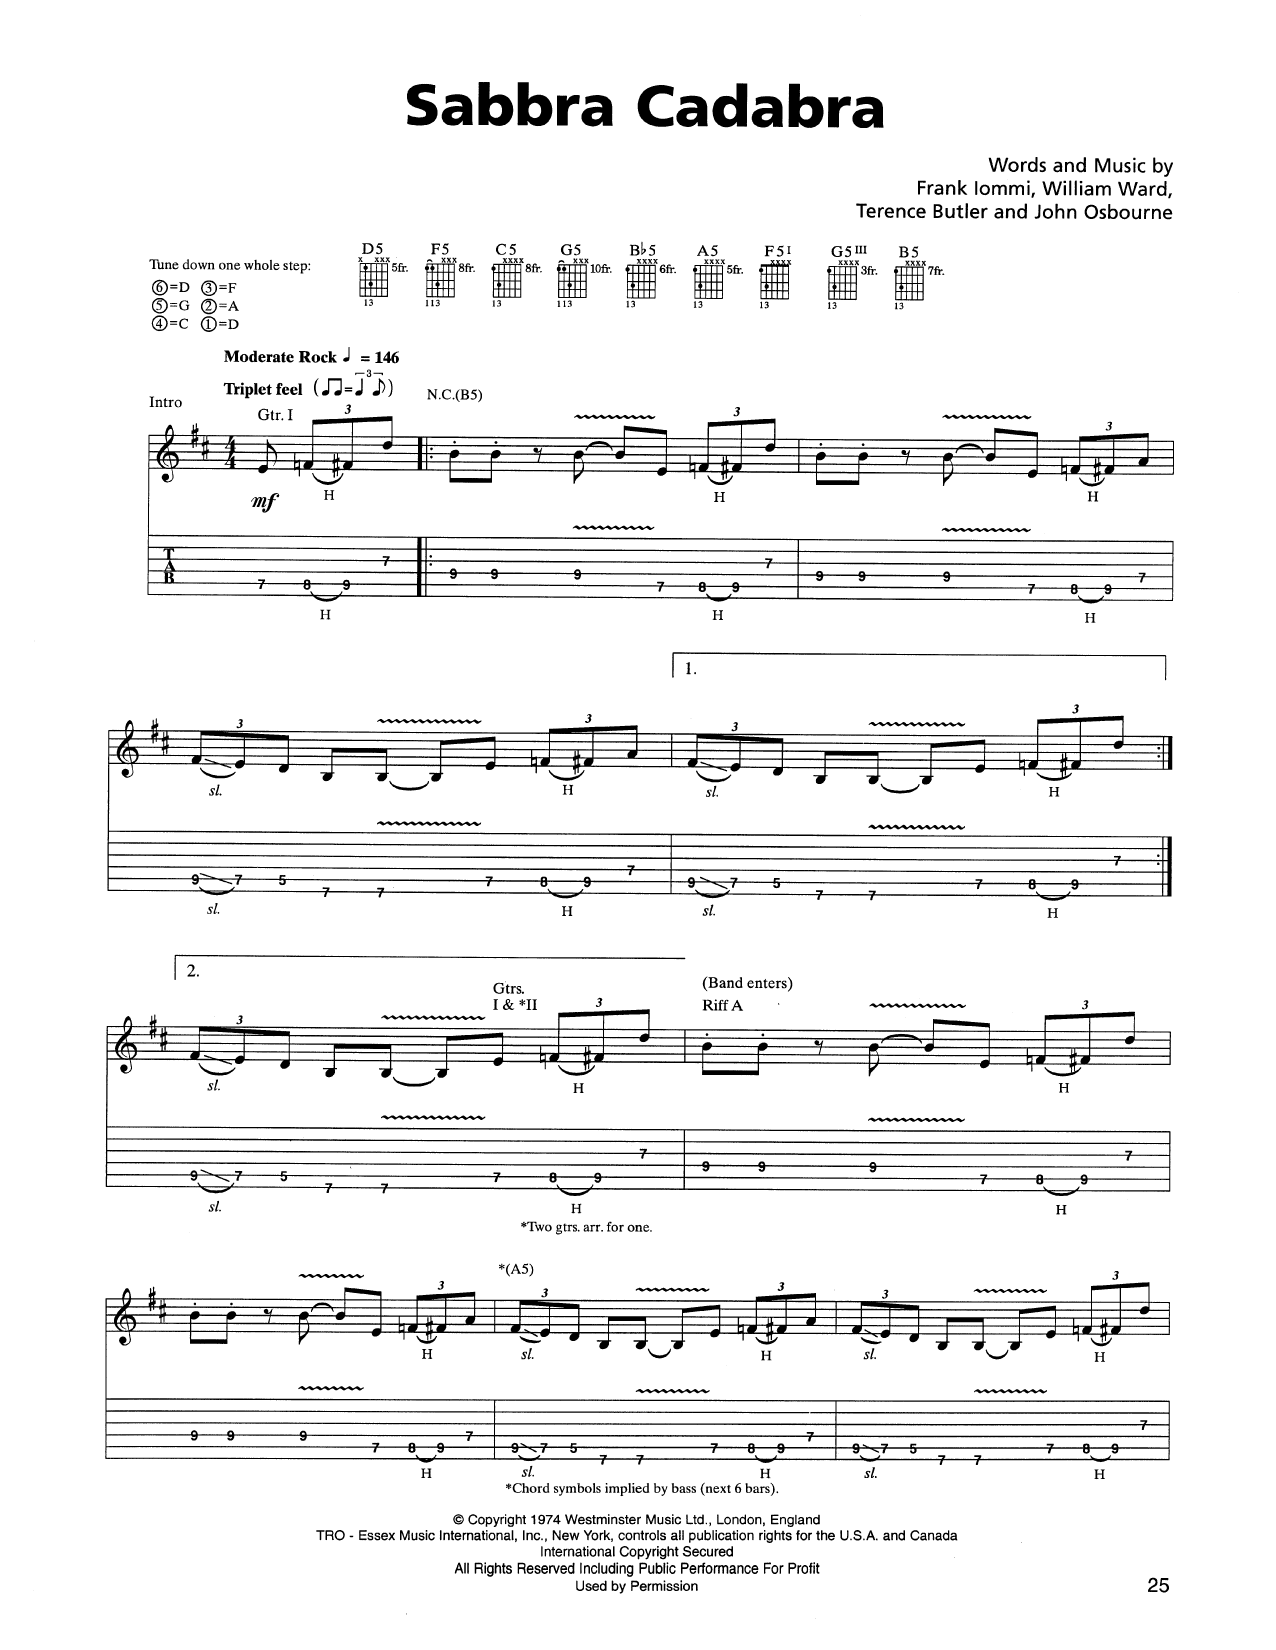 Metallica Sabbra Cadabra Sheet Music Notes & Chords for Bass Guitar Tab - Download or Print PDF